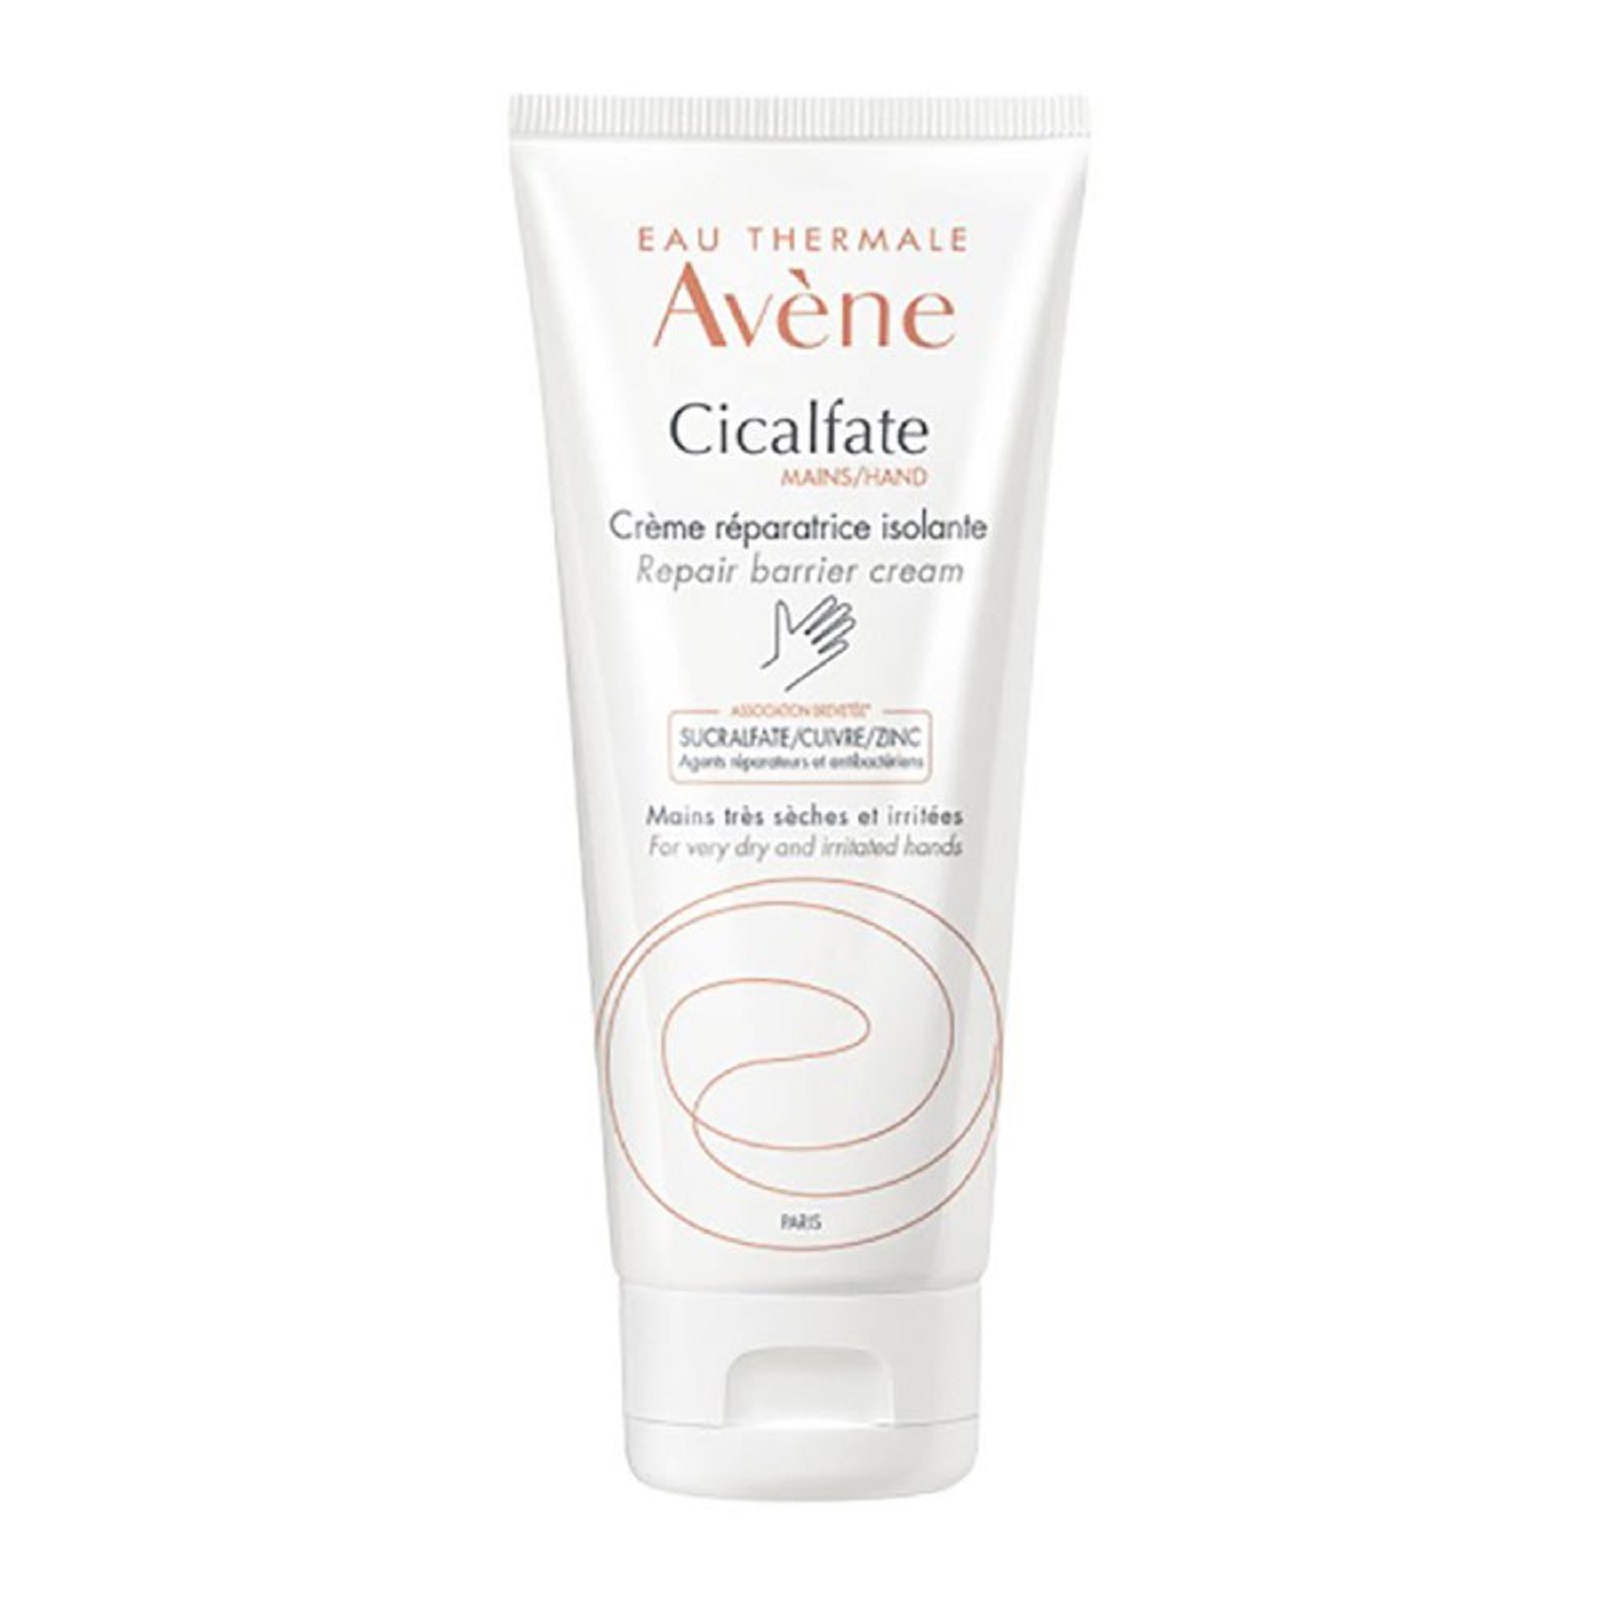 Buy Avene Cicalfate Repair Cream